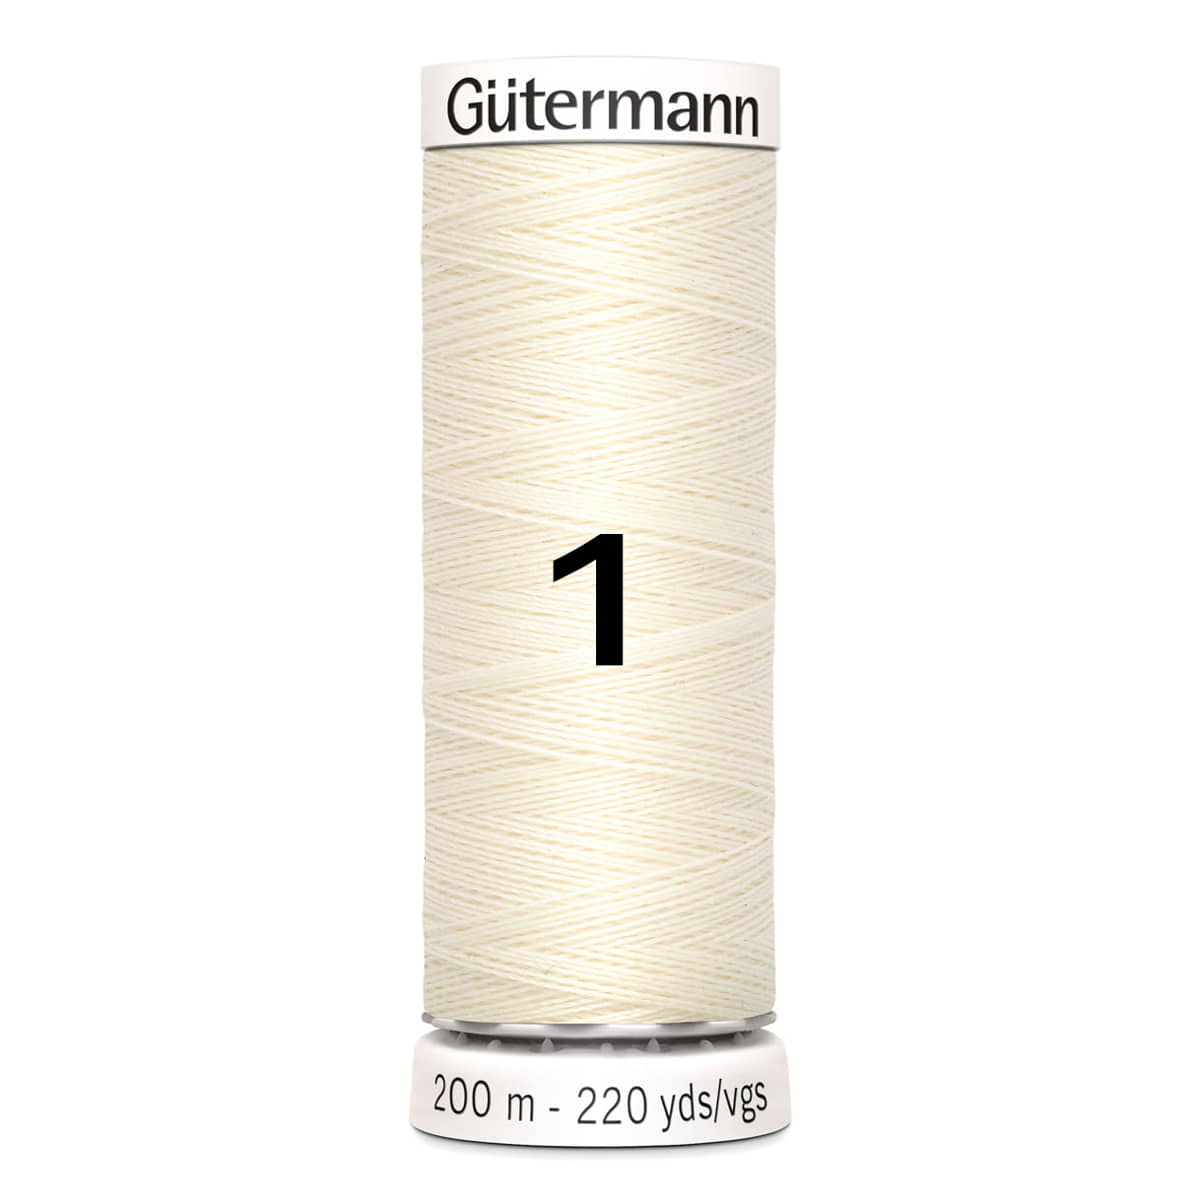 Gutermann garen | 200m | 1 creme naaigaren GM-200-1-CREME 4008015033828 - Fourniturenkraam.nl